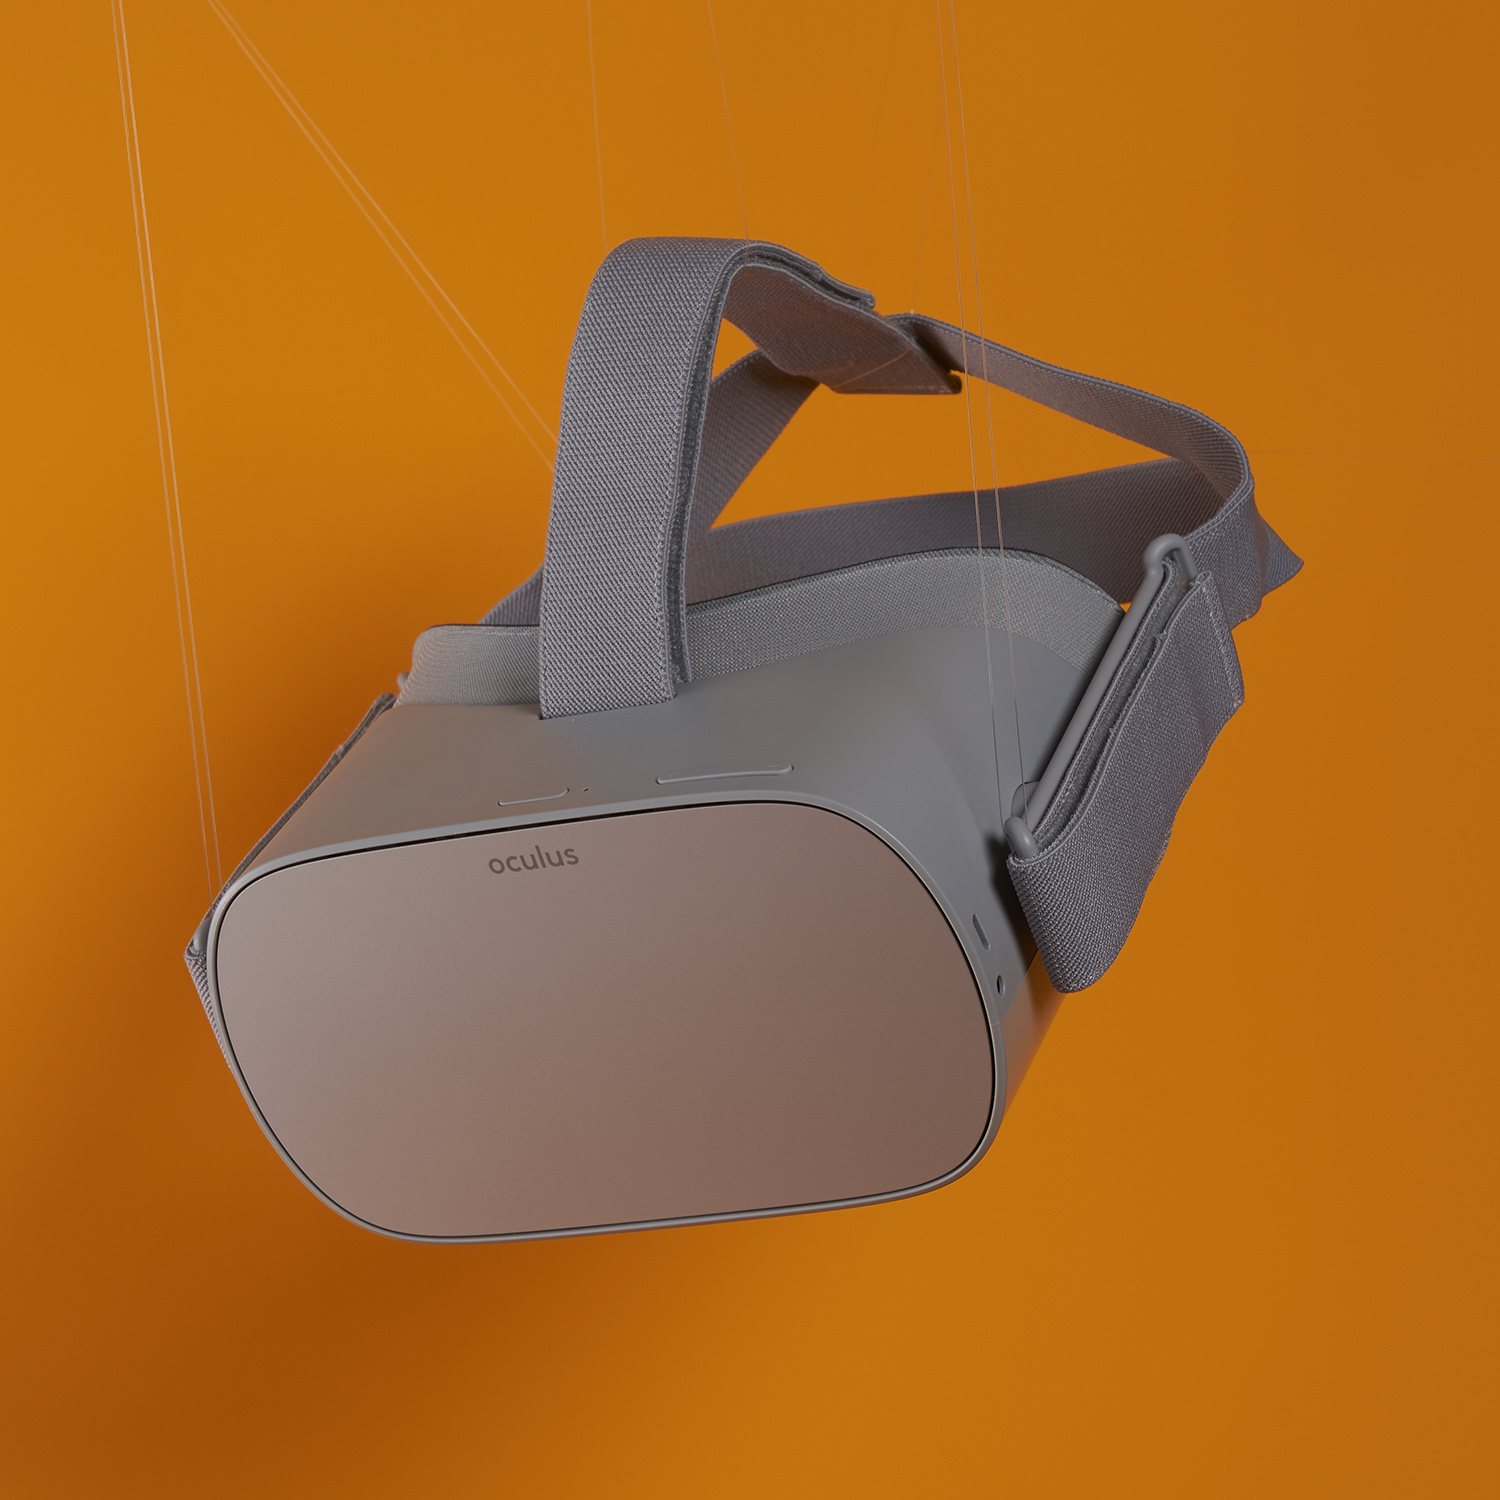 Oculus Go VR Headset Before Shot